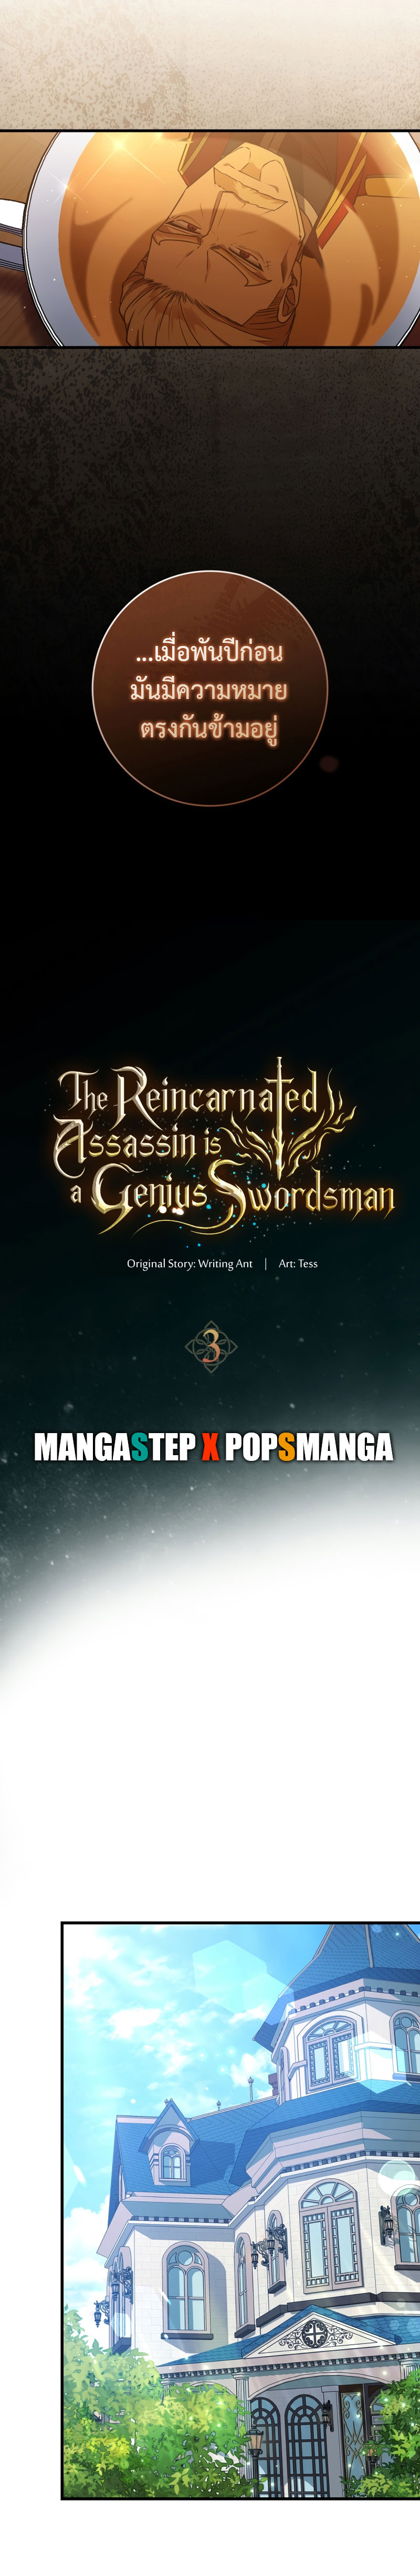 The Reincarnated Assassin is a Genius Swordsman ตอนที่ 3 07